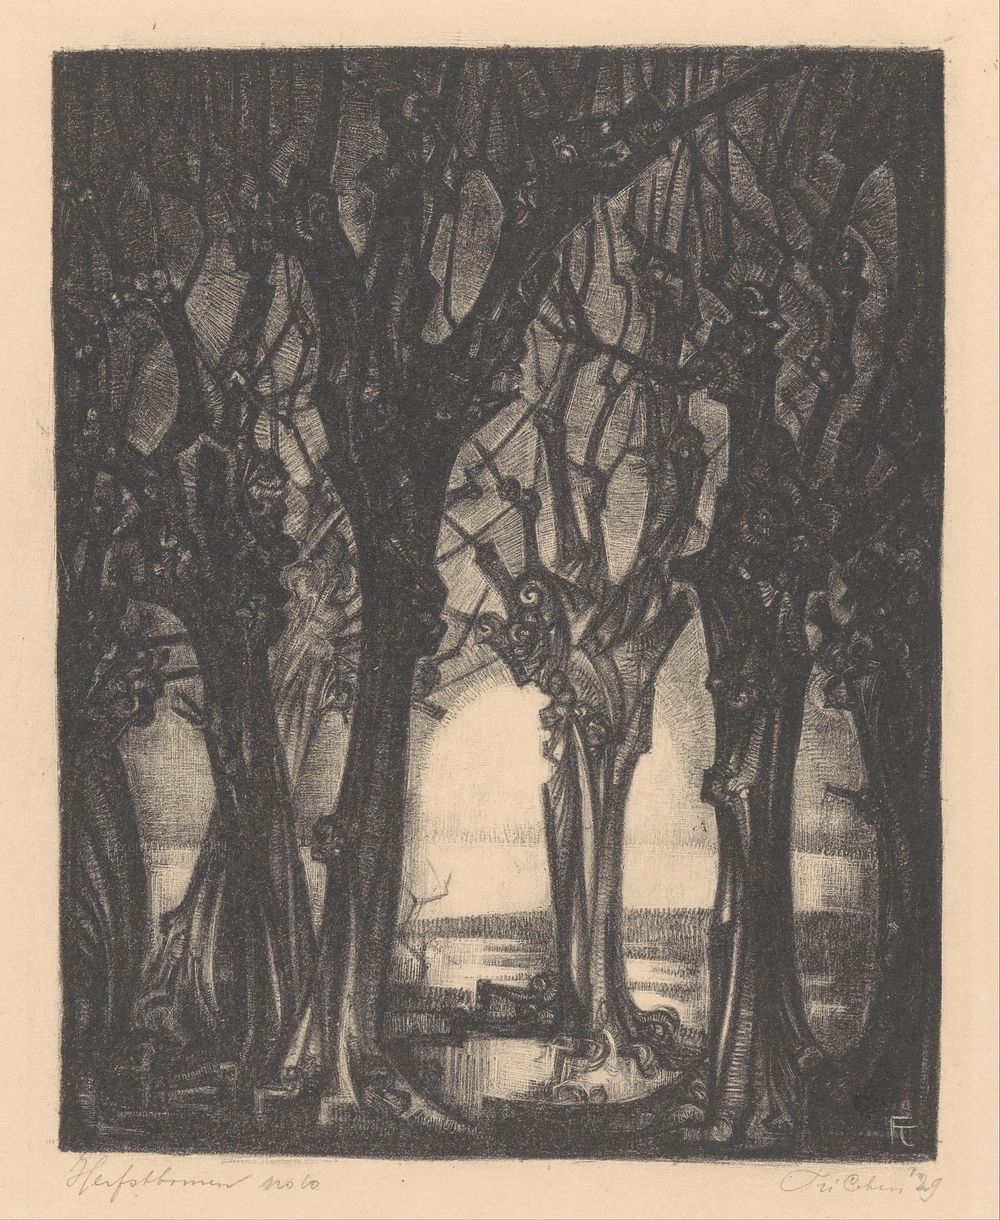 Herfstbomen (1929) by Fré Cohen